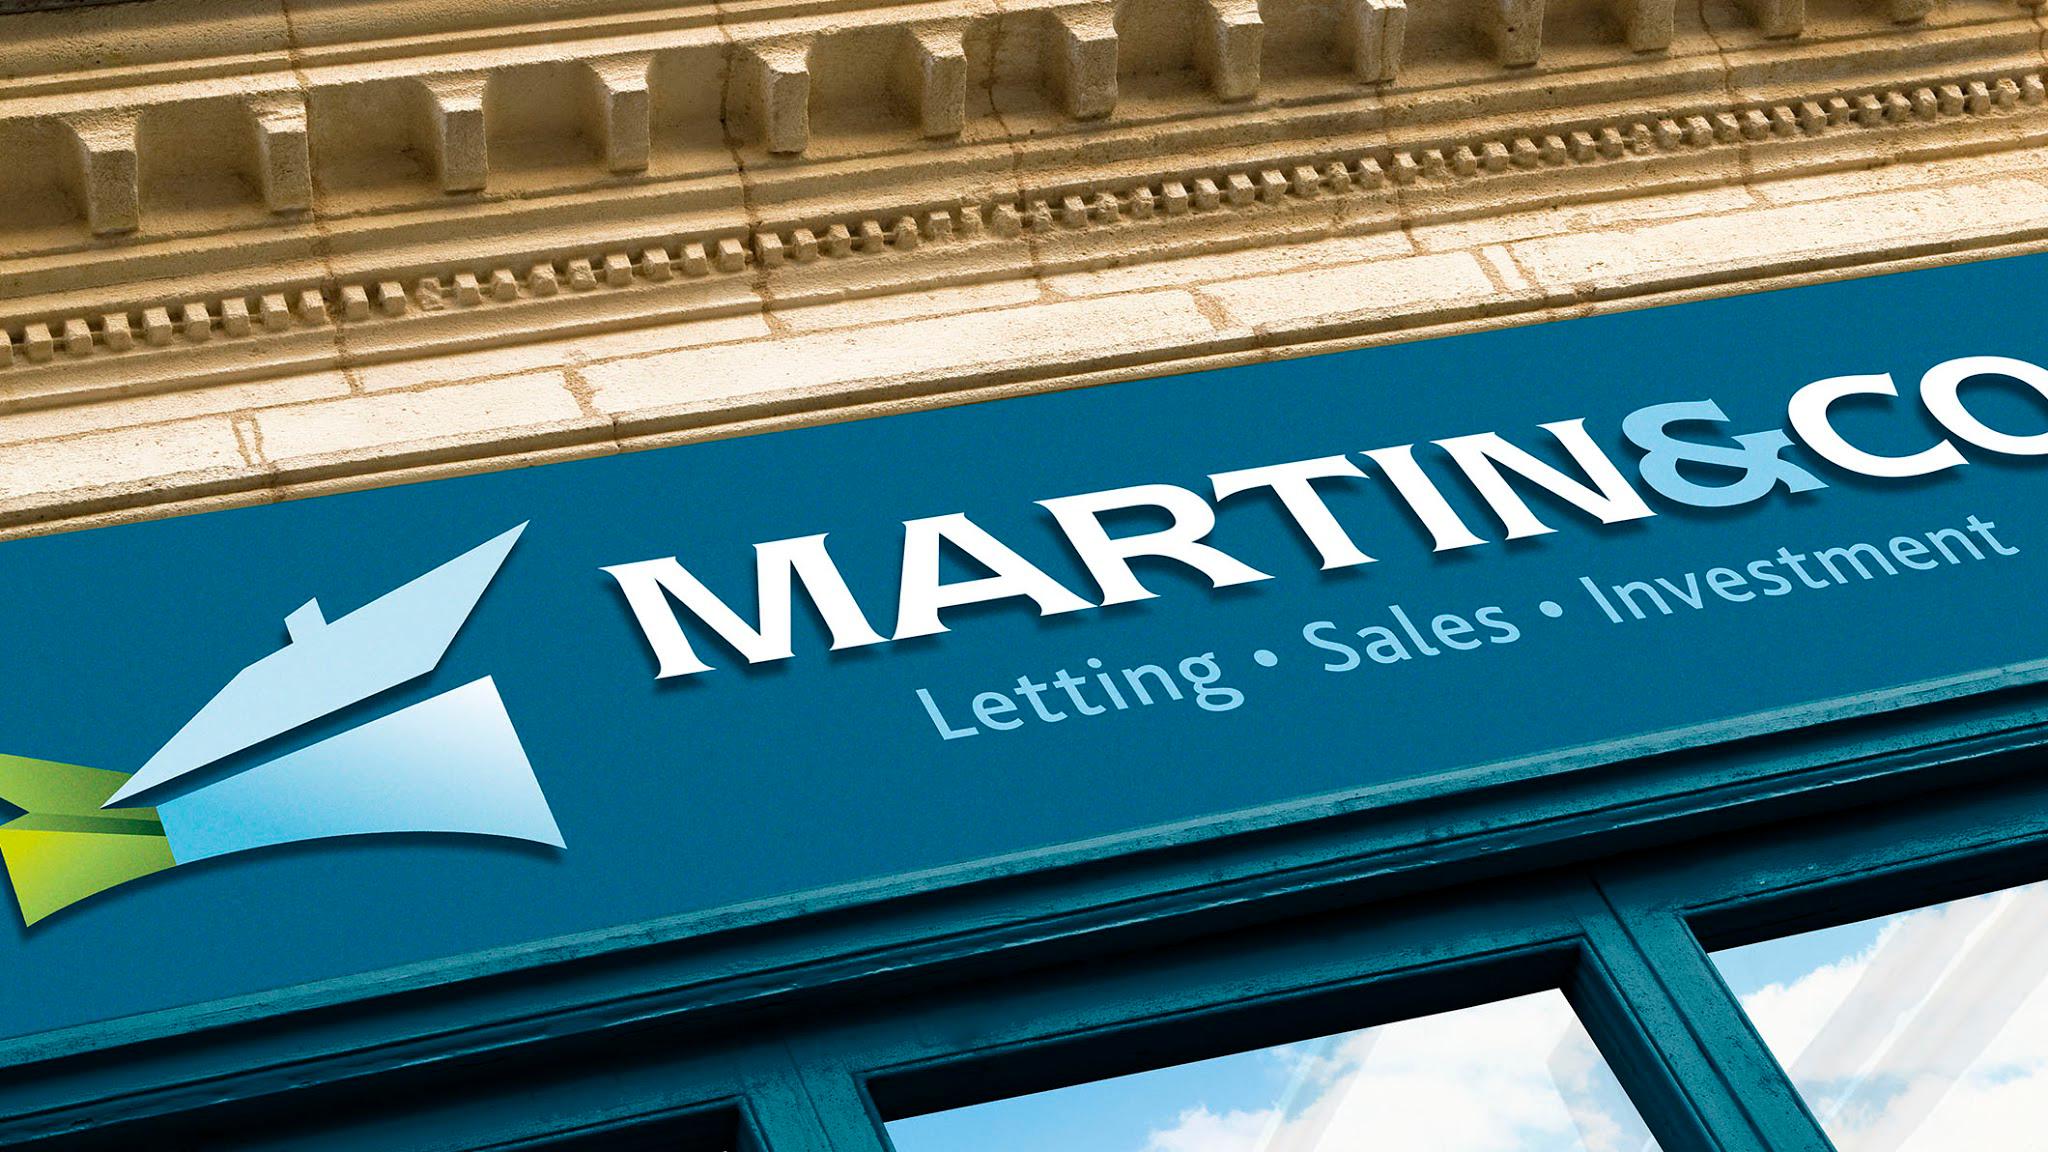 Martin & Co Ringwood Lettings & Estate Agents Ringwood 01425 474005